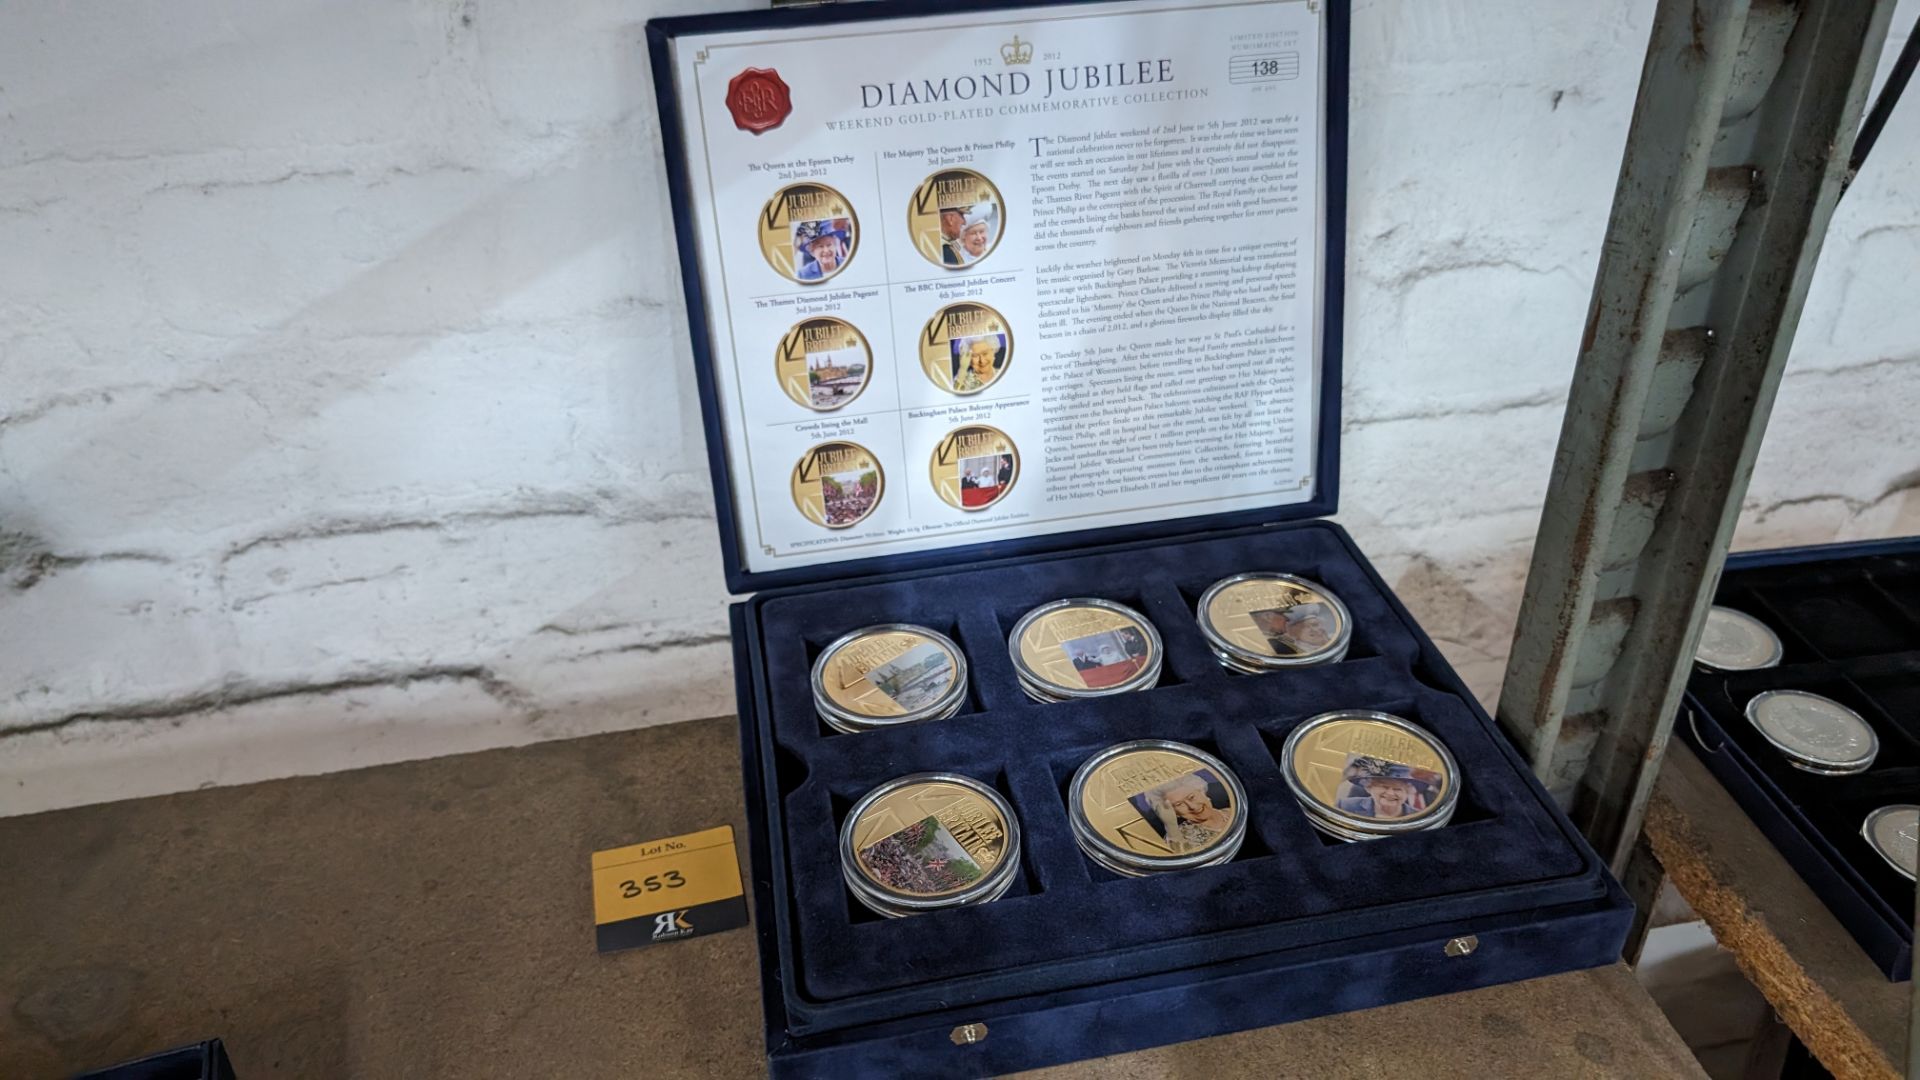 Diamond Jubilee set of 6 decorative coins including presentation case